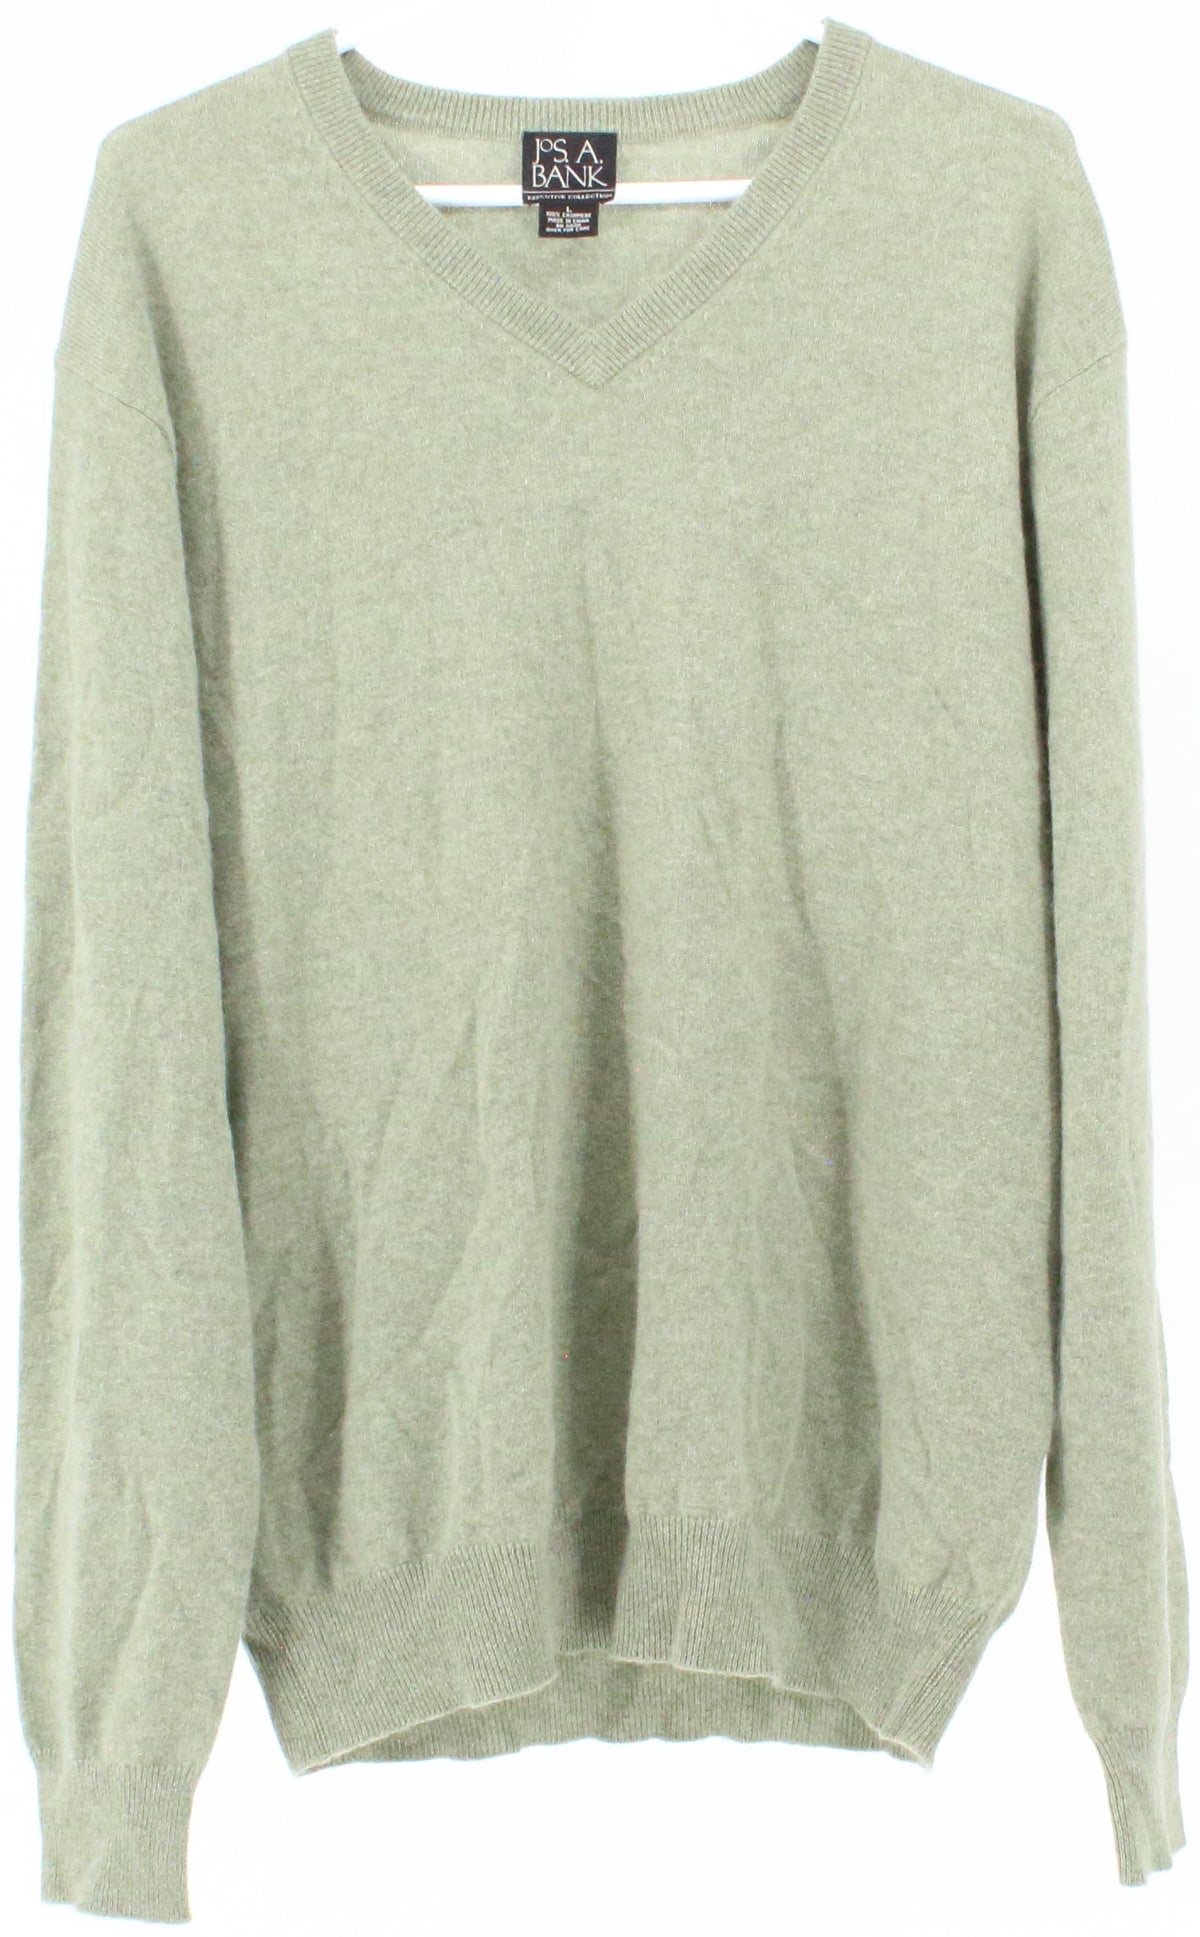 JoS. A. Bank Light Green V Neck Men's Cashmere Sweater